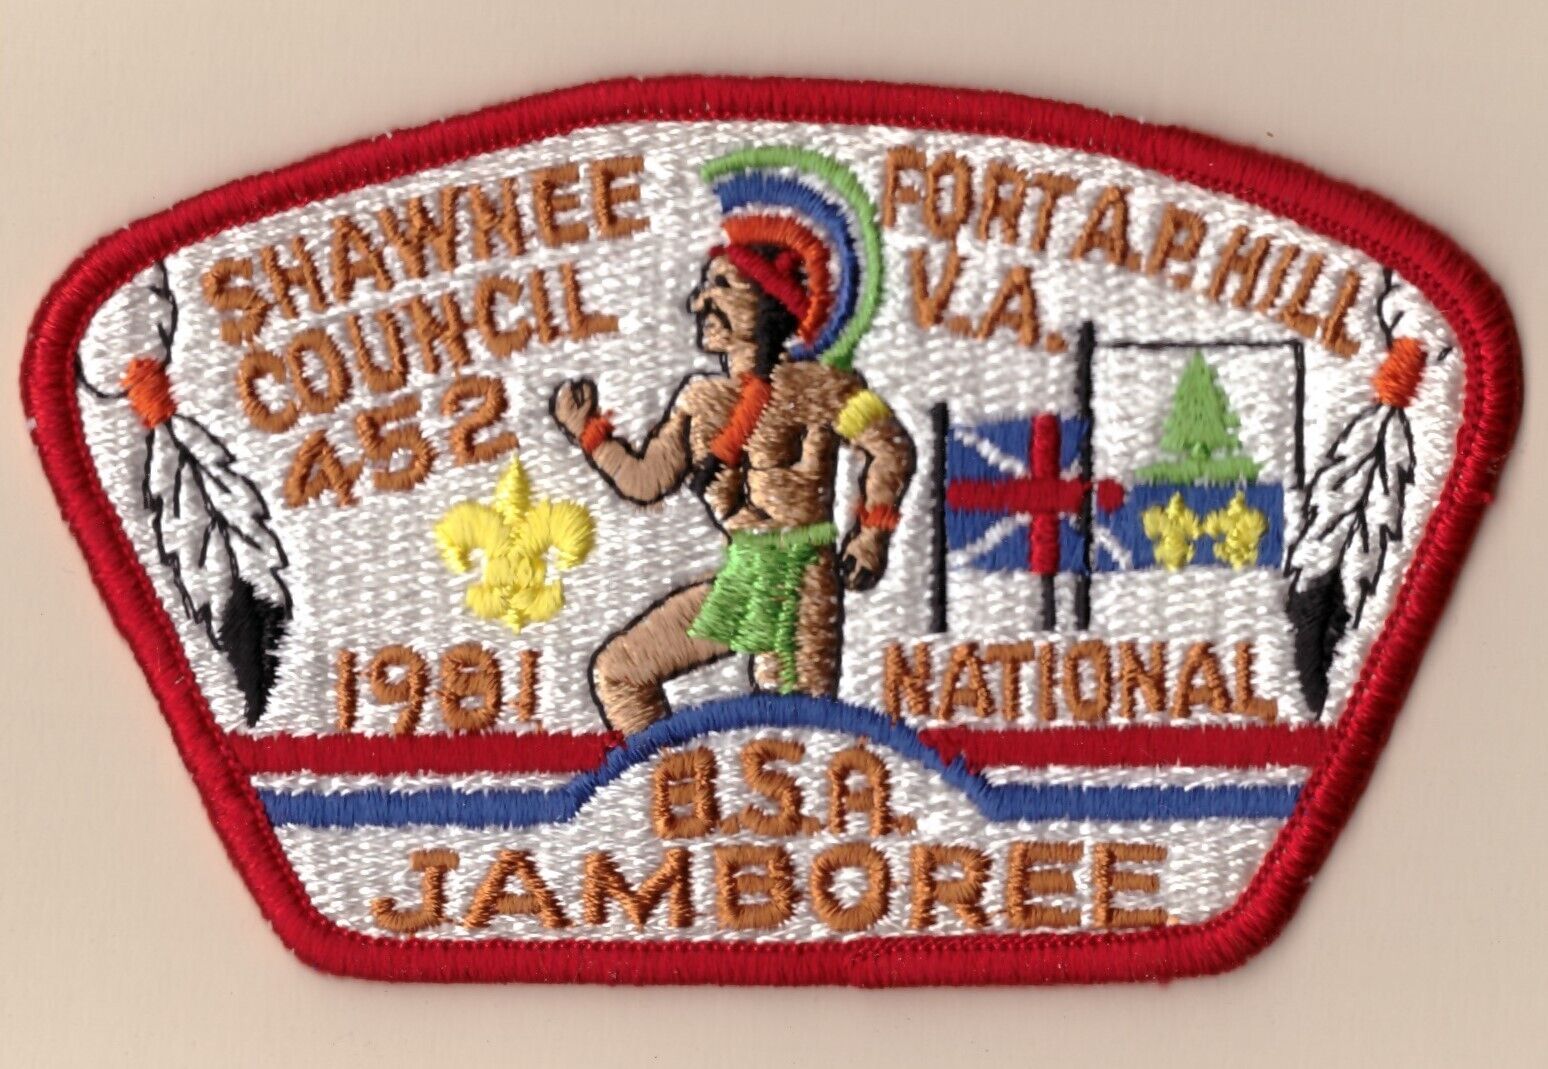 JSP - Shawnee Council - Mint - National Jamboree 1981 - OH -